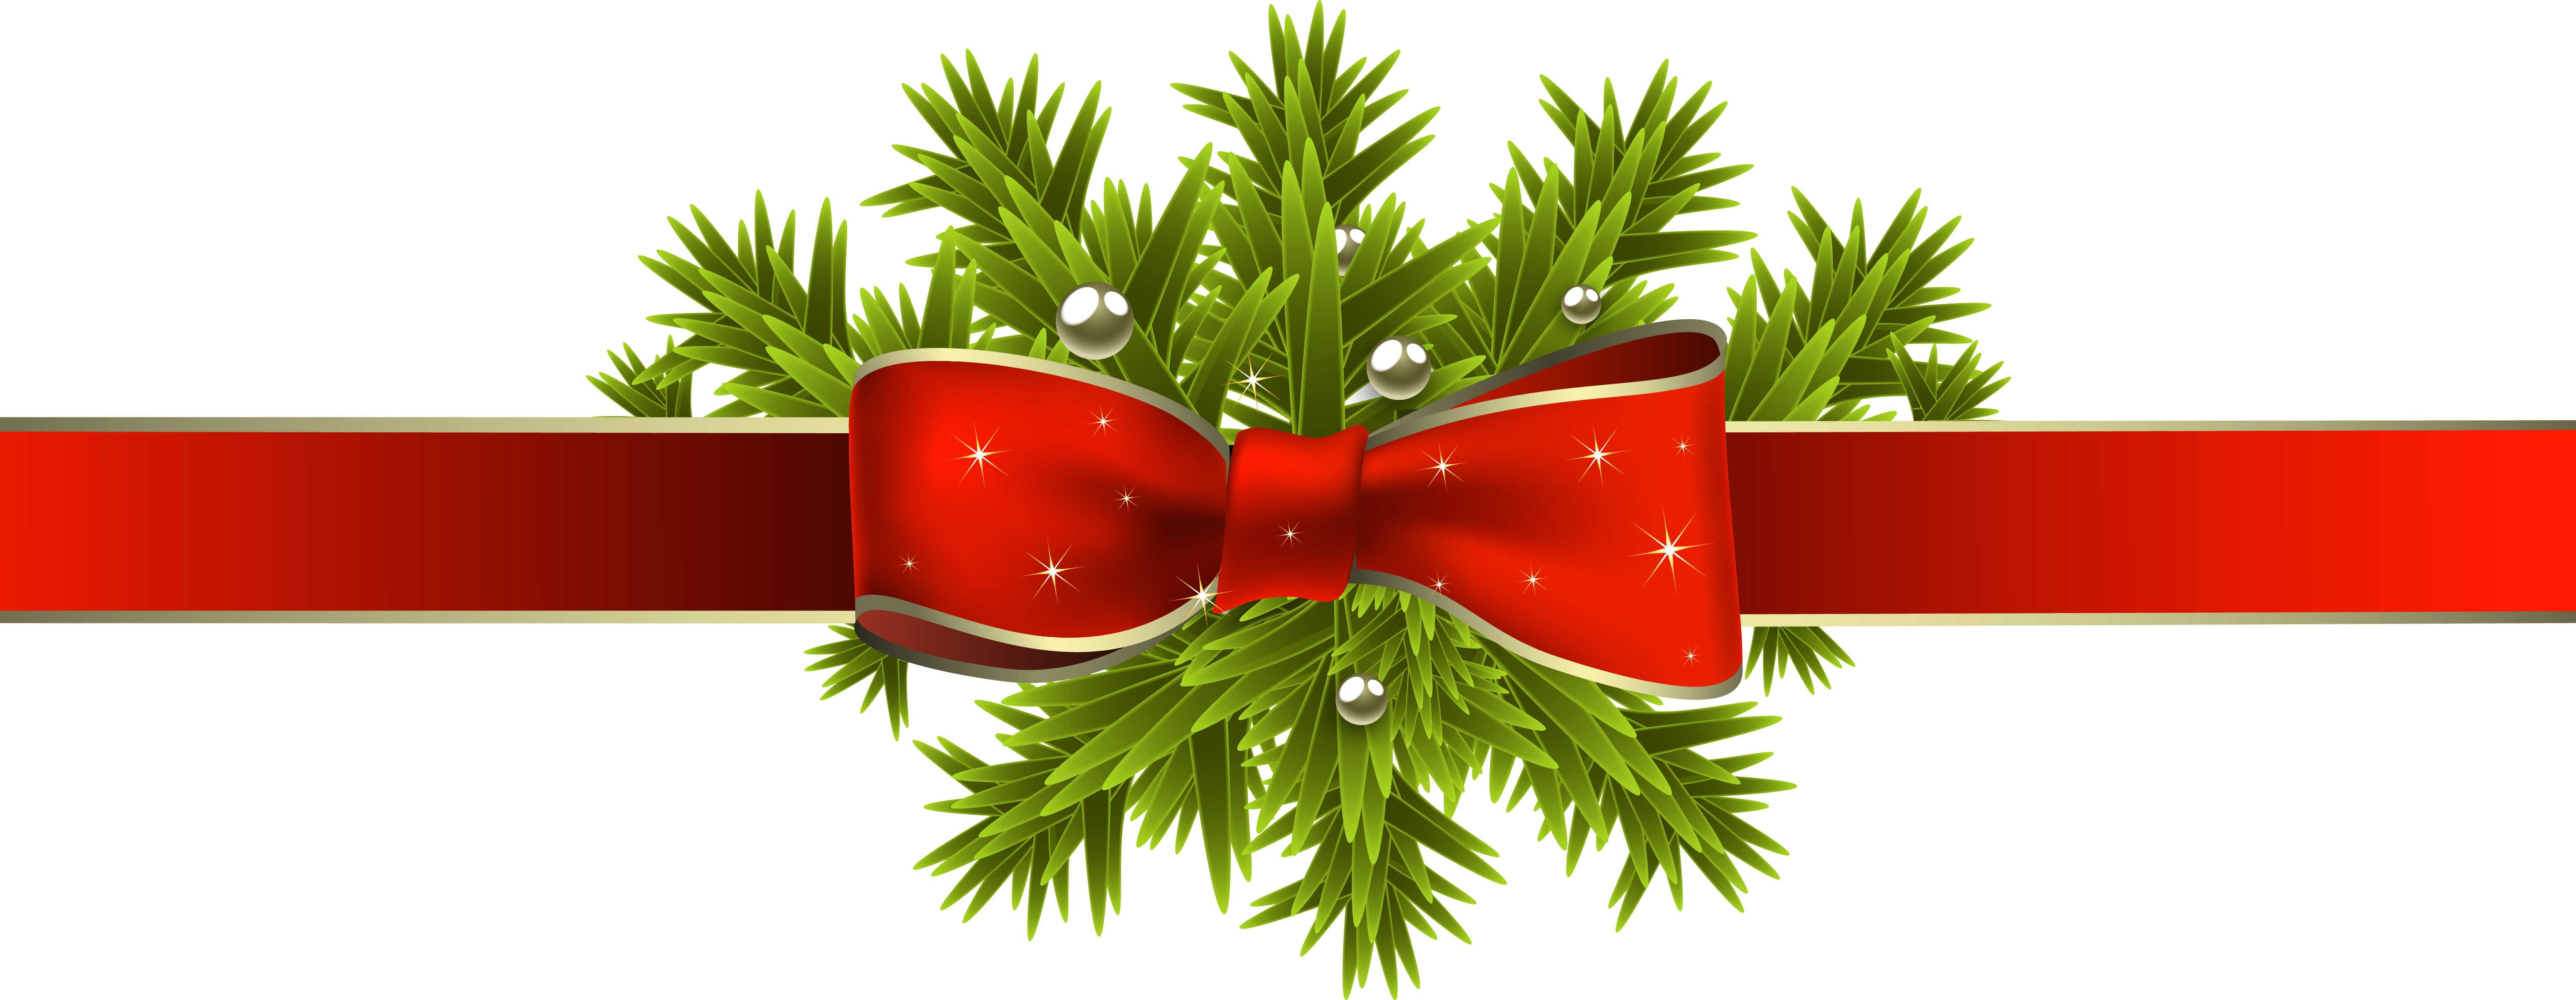 free holiday ribbon clip art - photo #15